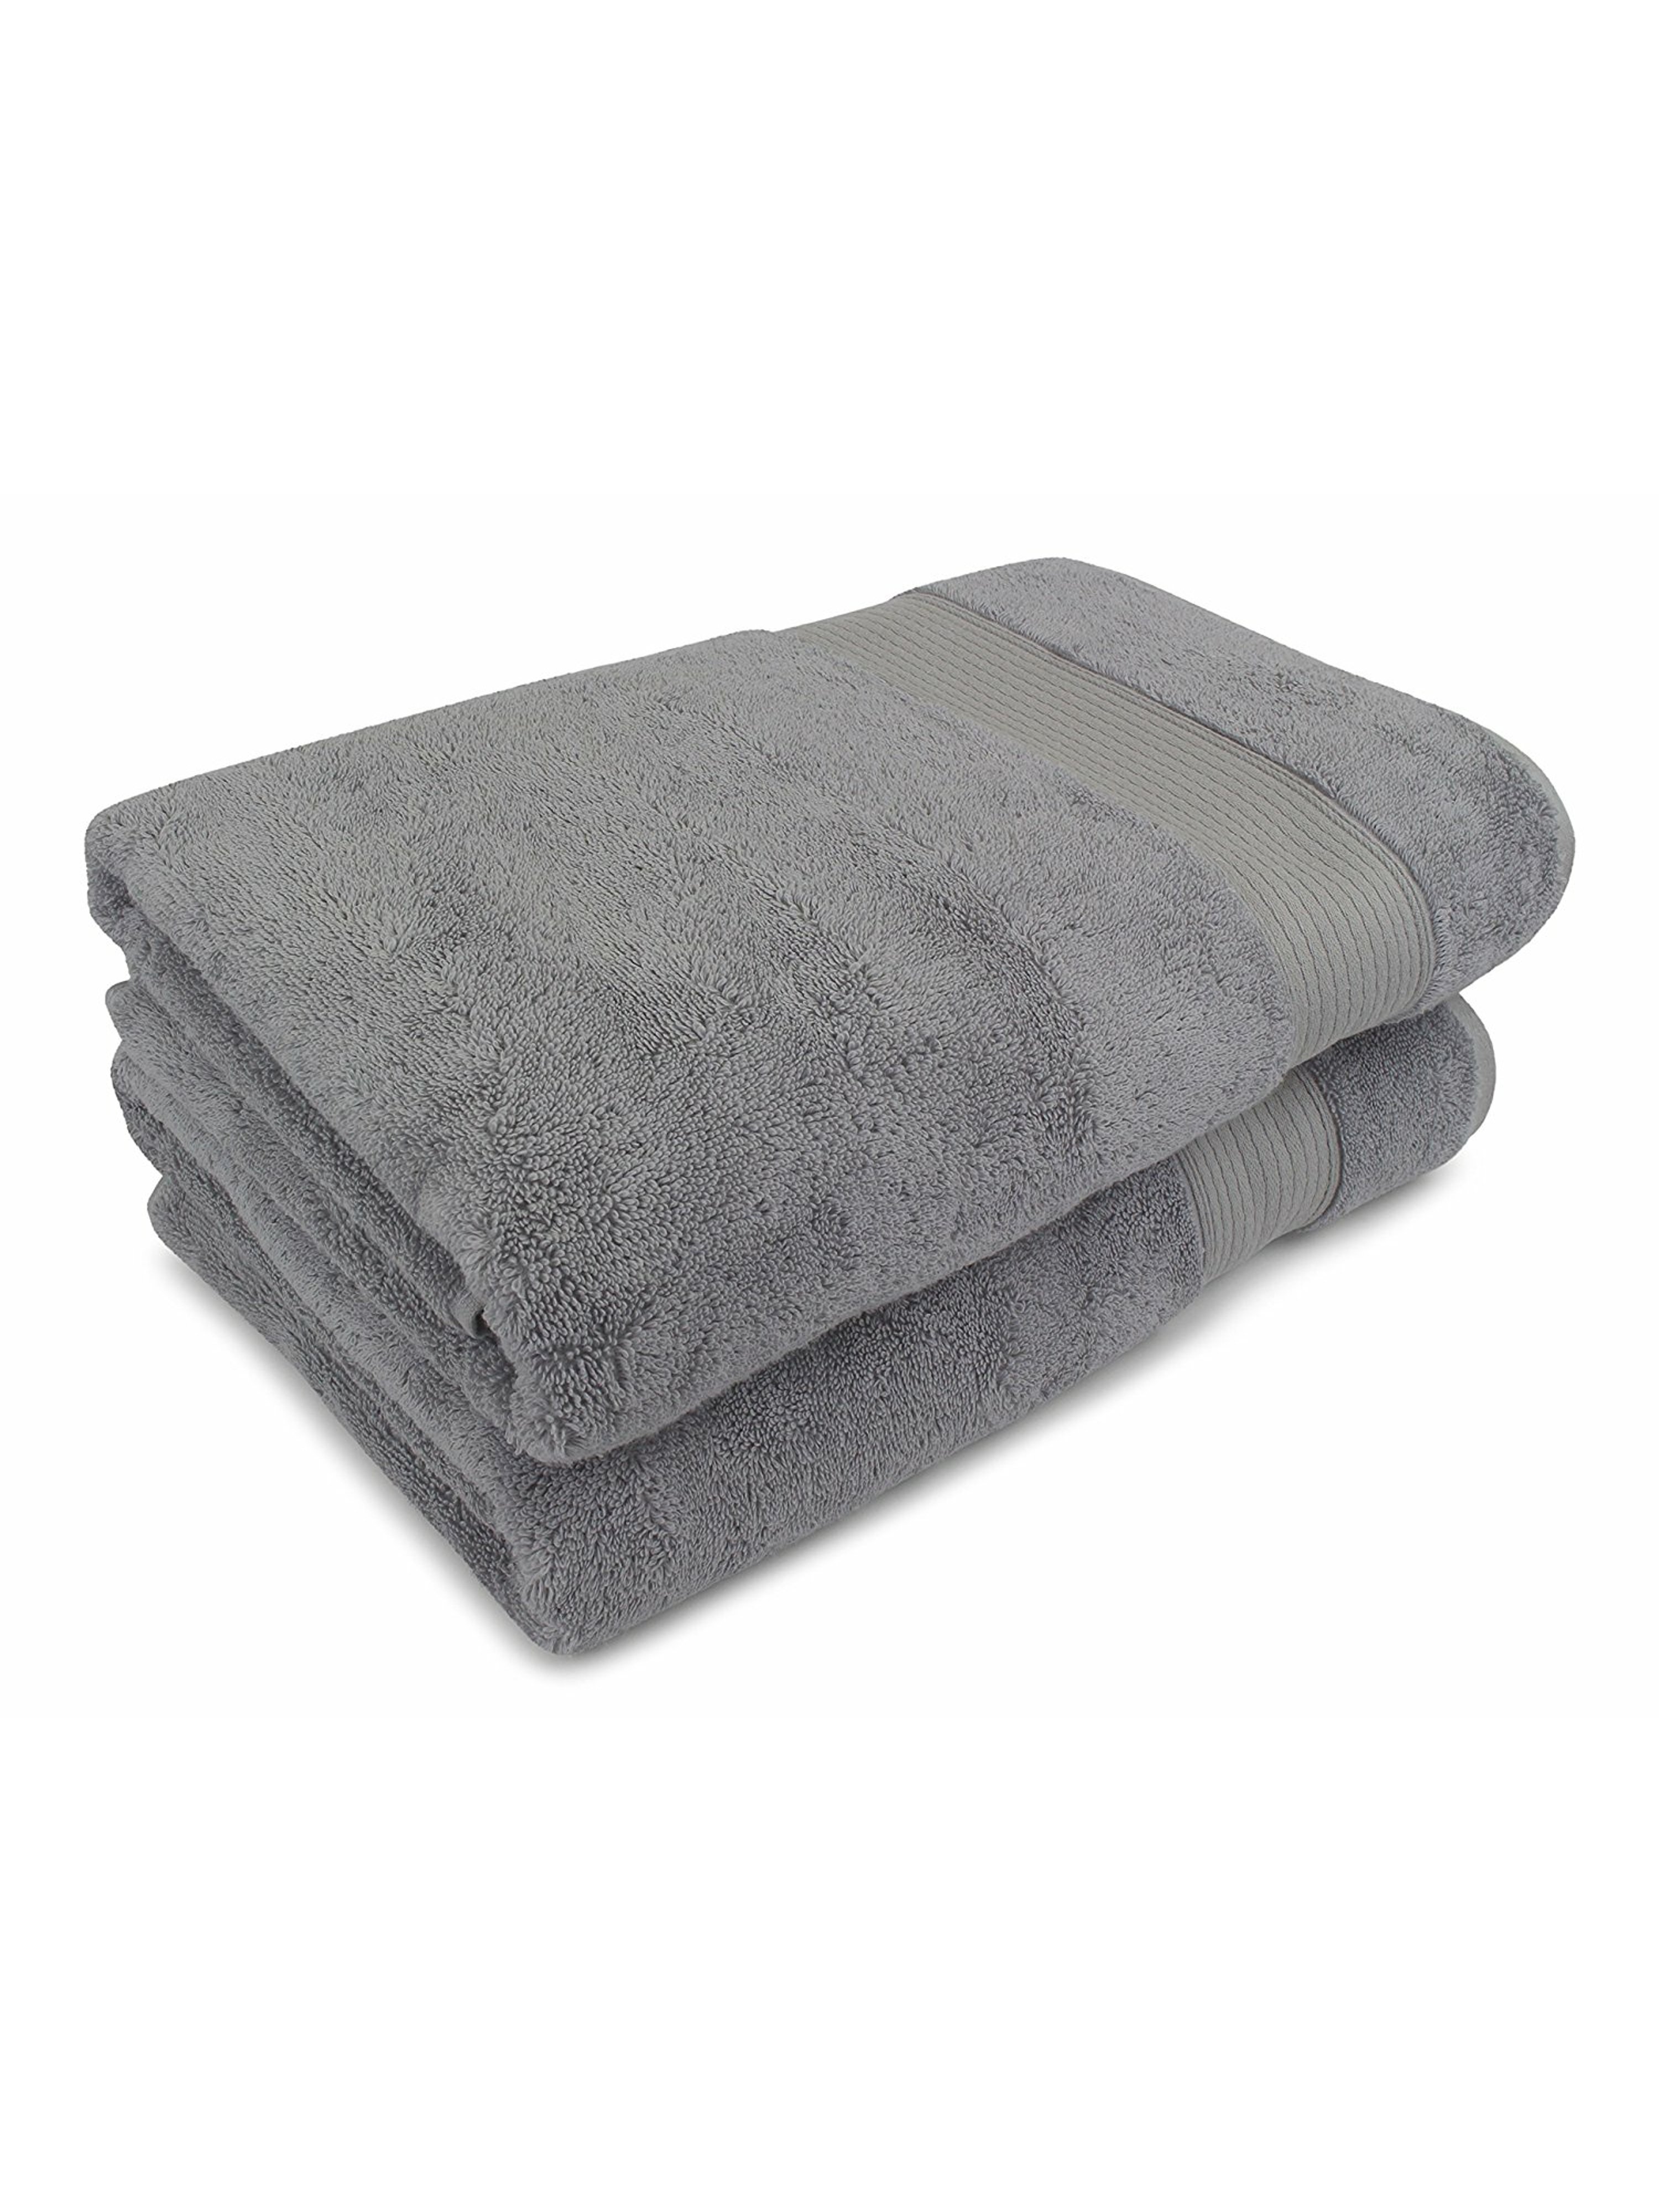 Classic Turkish Towels Silk Towel Bt 6030 In Grey